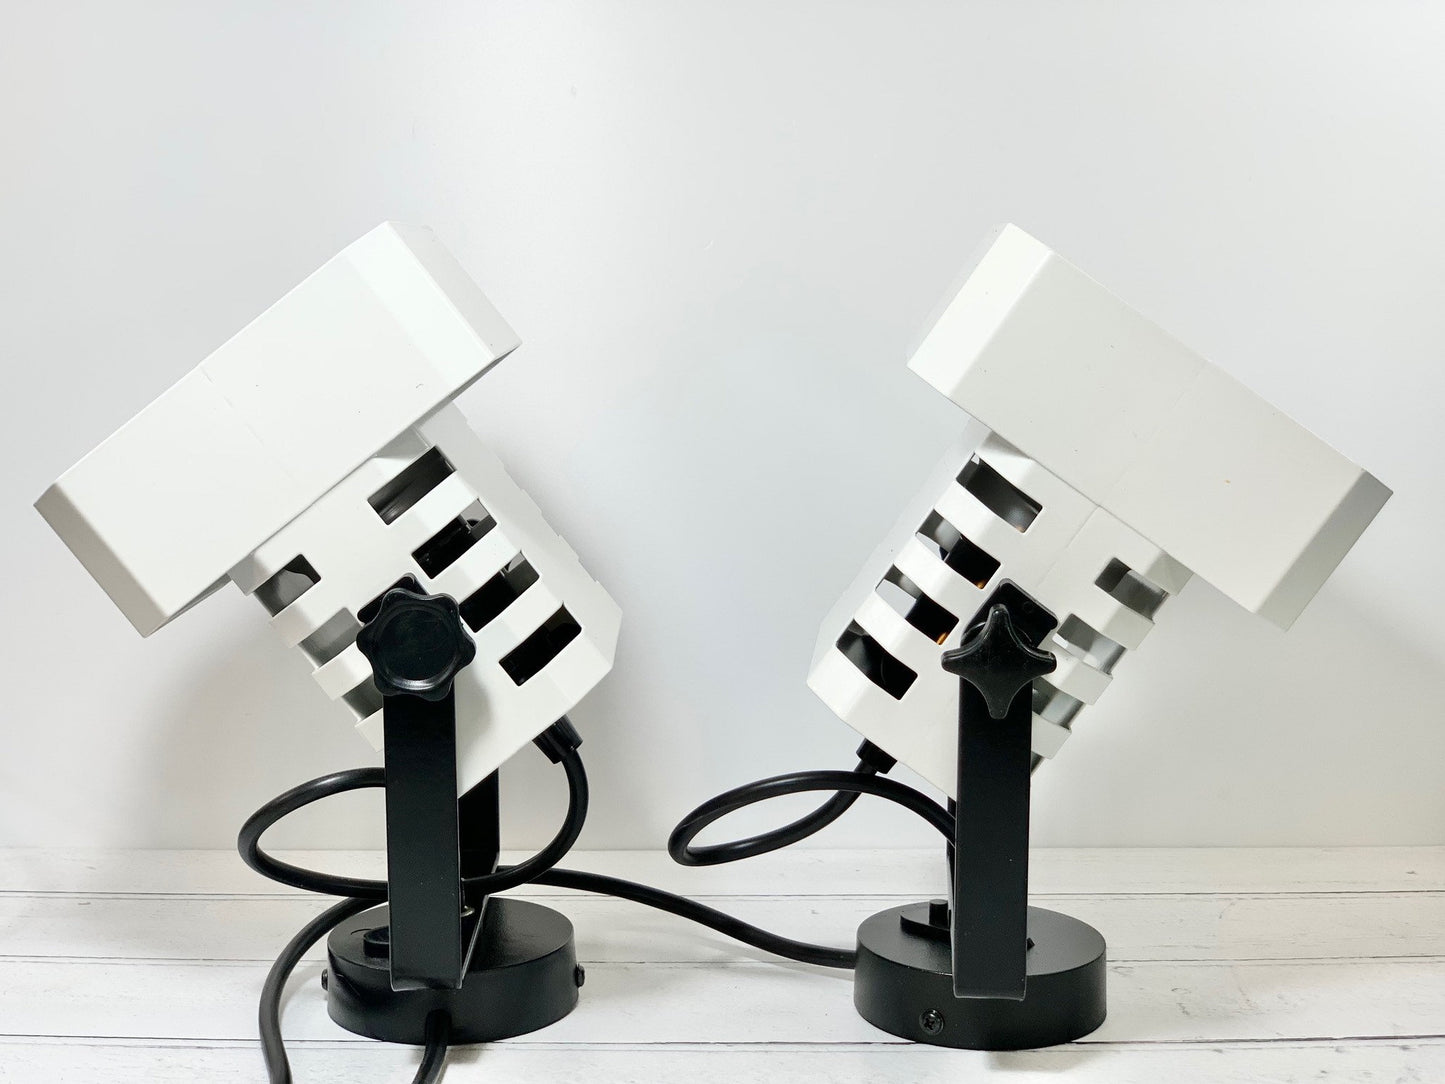 2 Danish Flipper Spotlights Wall Lamps Sconces Retro Industrial Louis Poulsen Lights